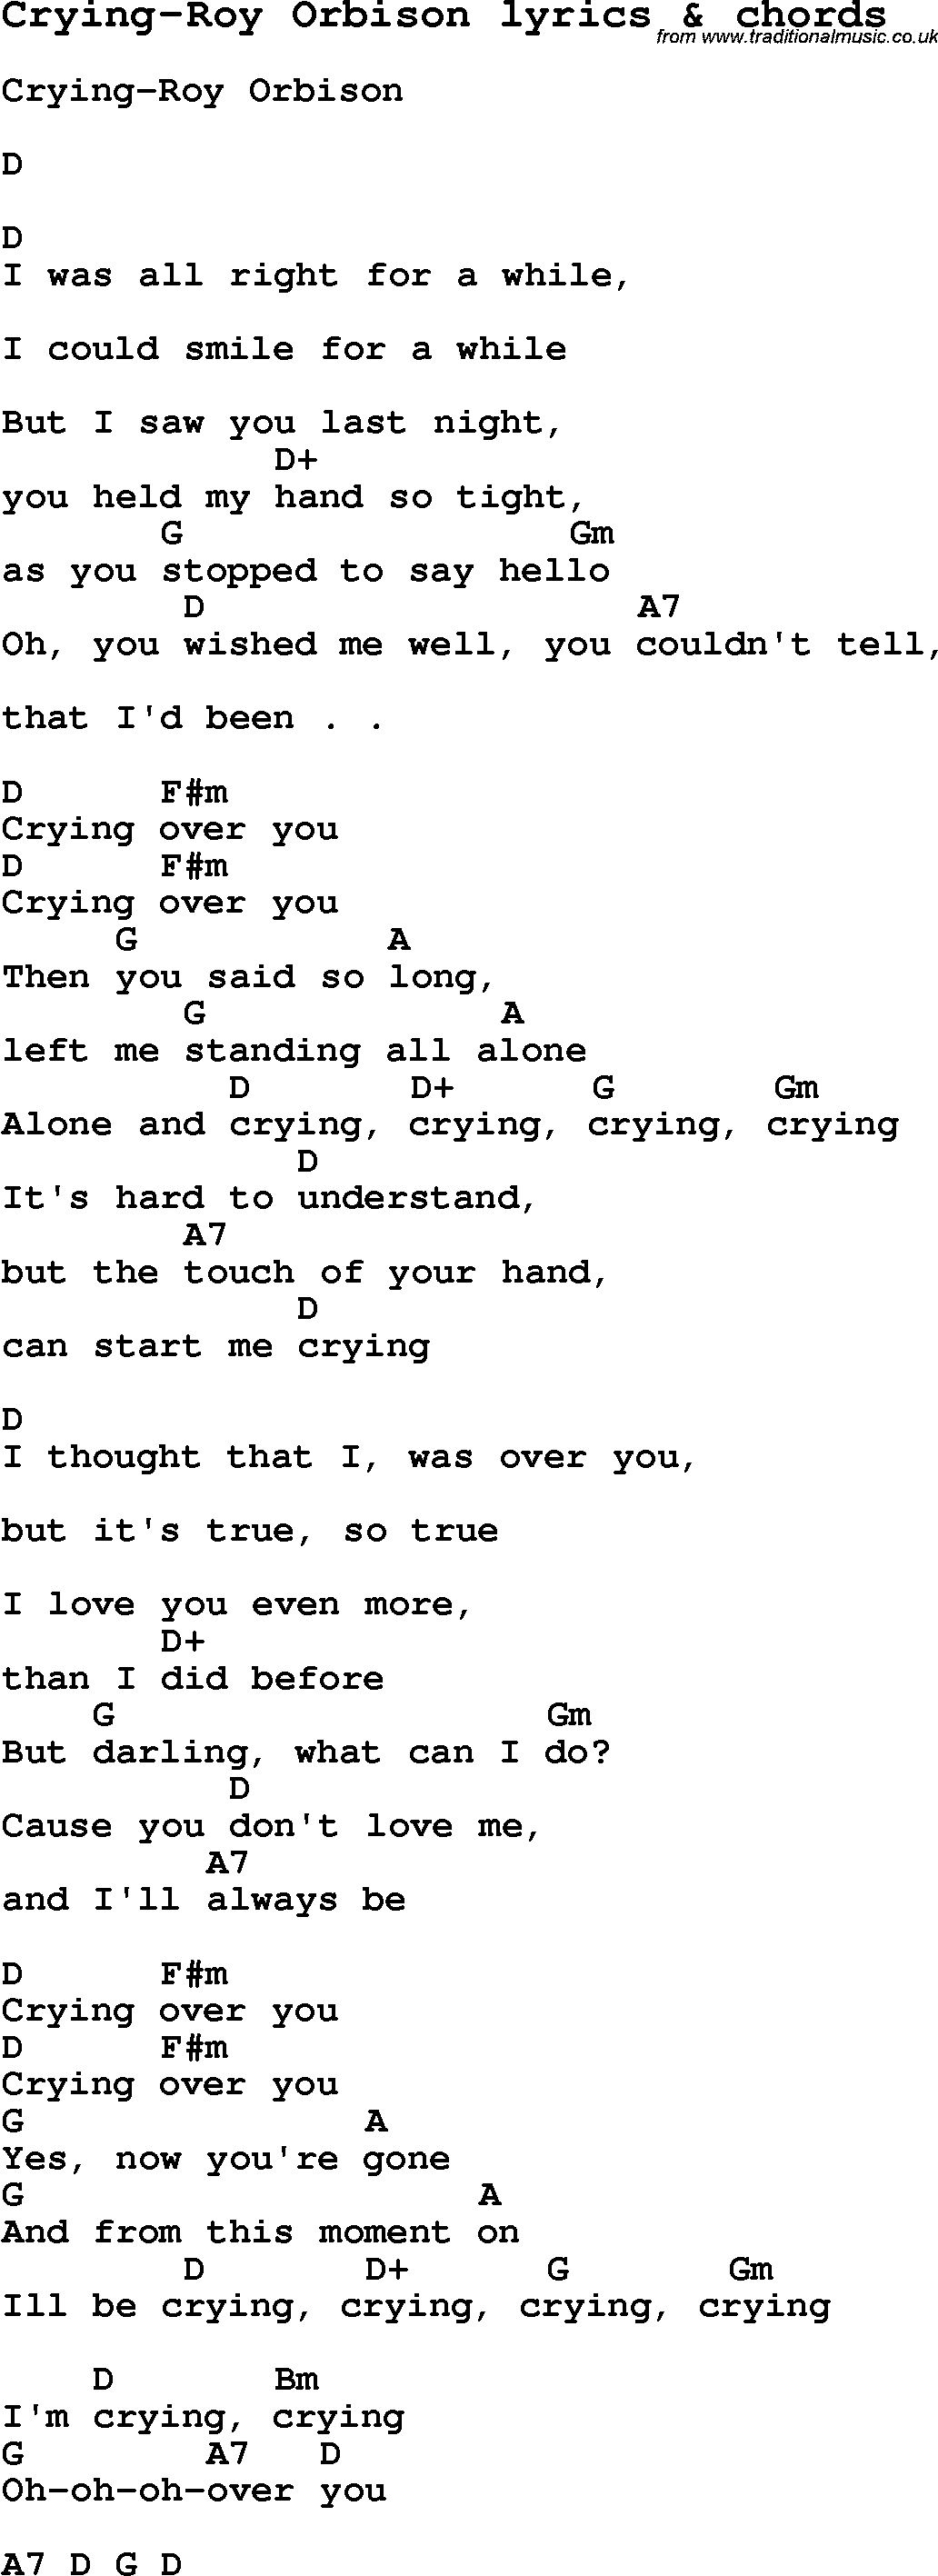 Love Song Lyrics for: Crying-Roy Orbison with chords for Ukulele, Guitar Banjo etc.